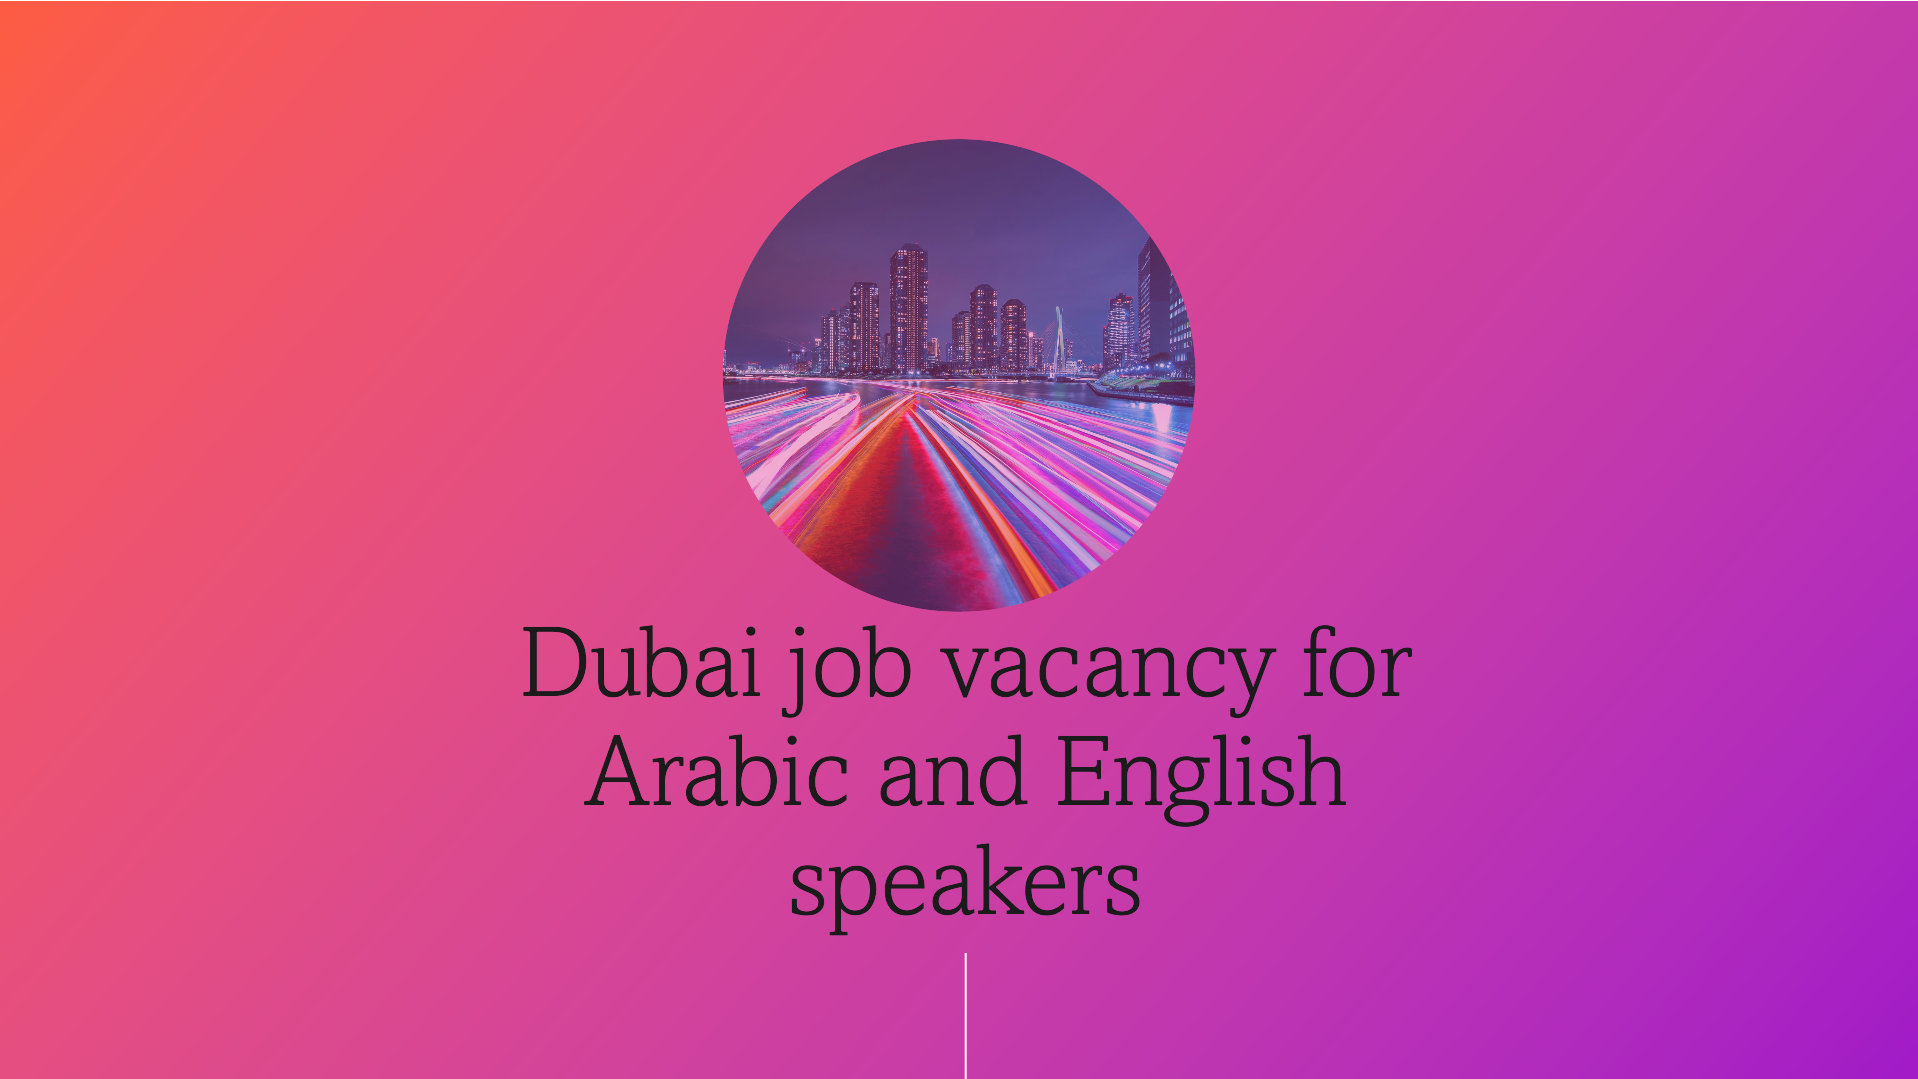 Dubai job vacancy for Arabic and English speakers